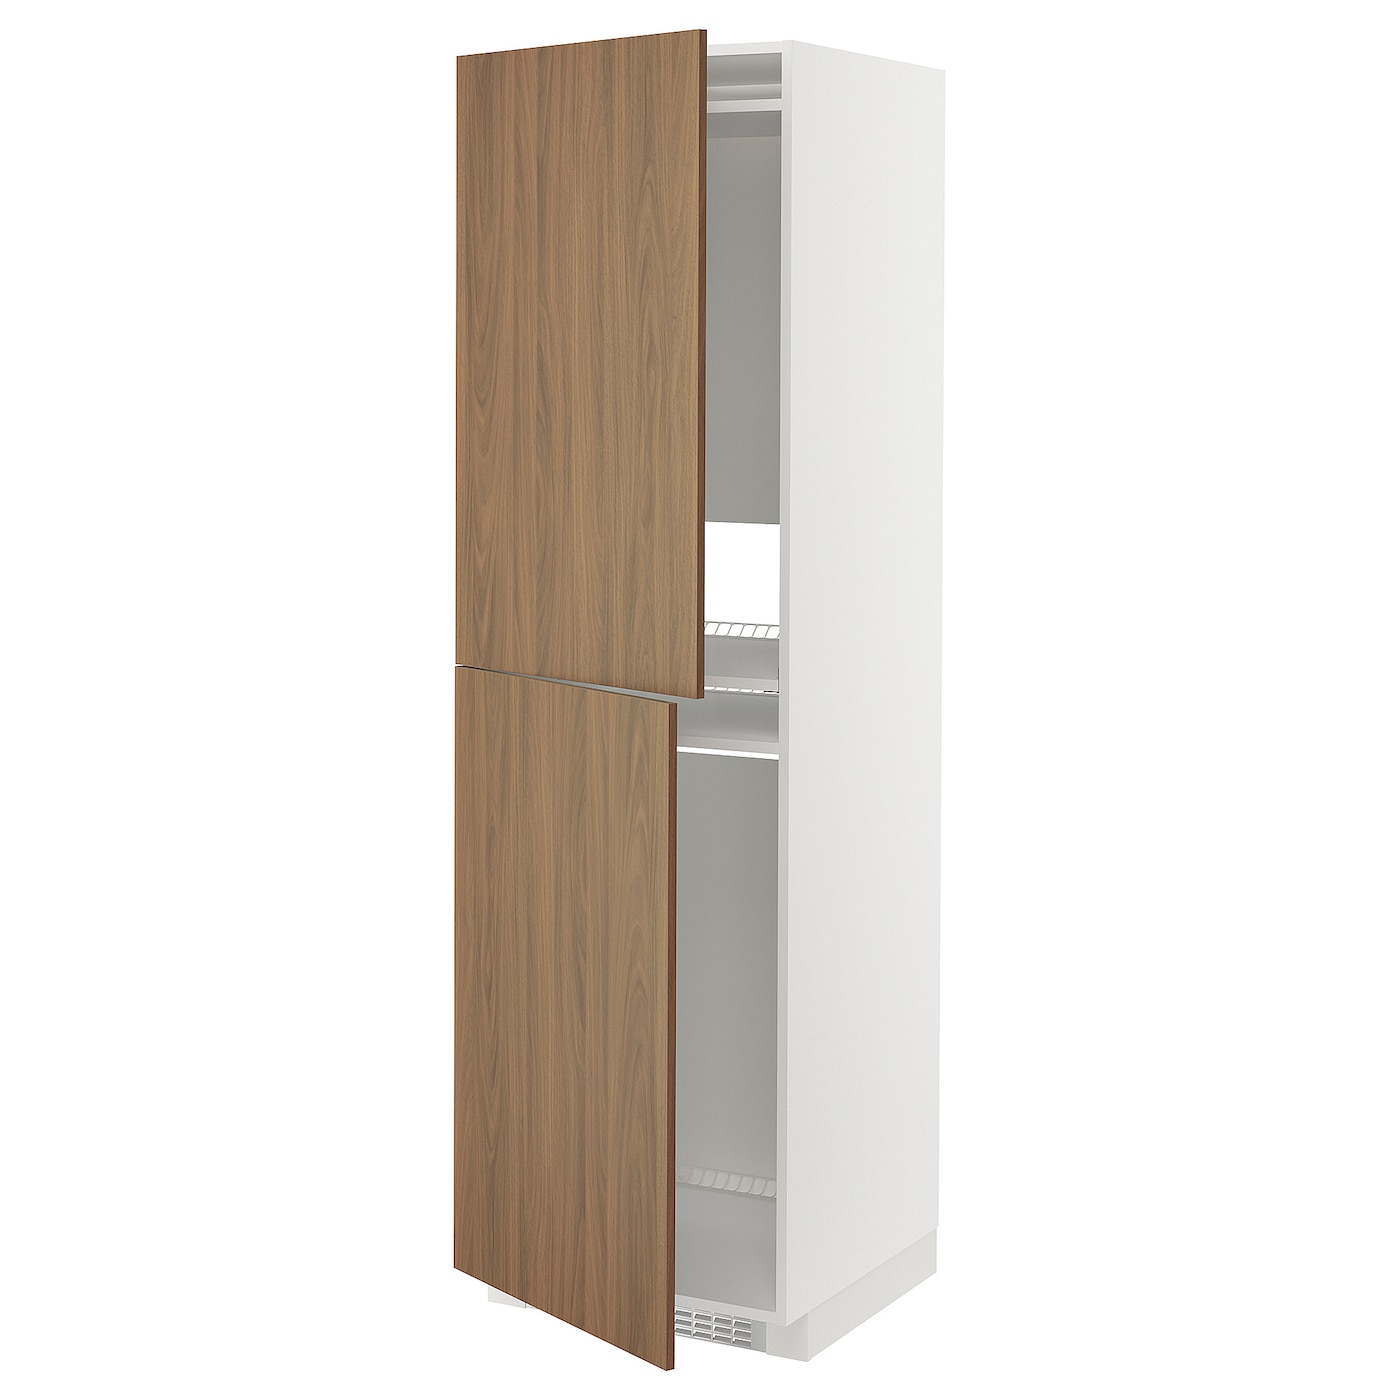 Высокий кухонный шкаф - IKEA METOD/МЕТОД ИКЕА, 200х60х60 см, белый/коричневый